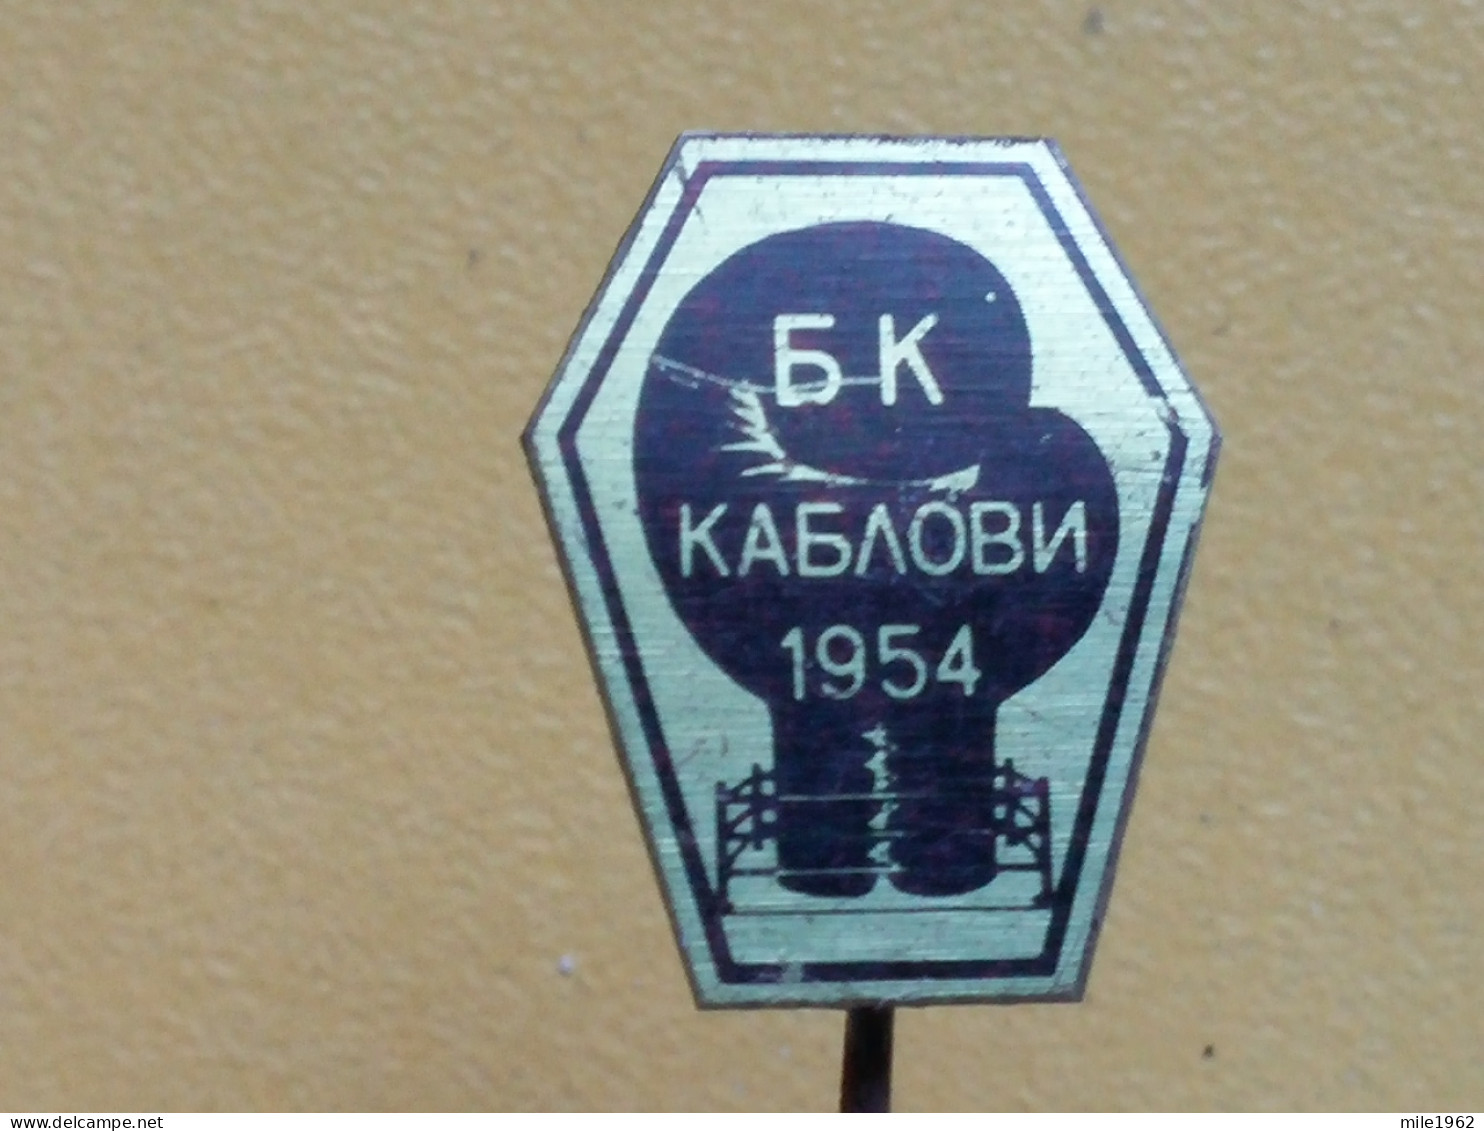 Badge Z-52-1 - BOX, BOXE, BOXING CLUB KABLOVI 1954 - Boxe